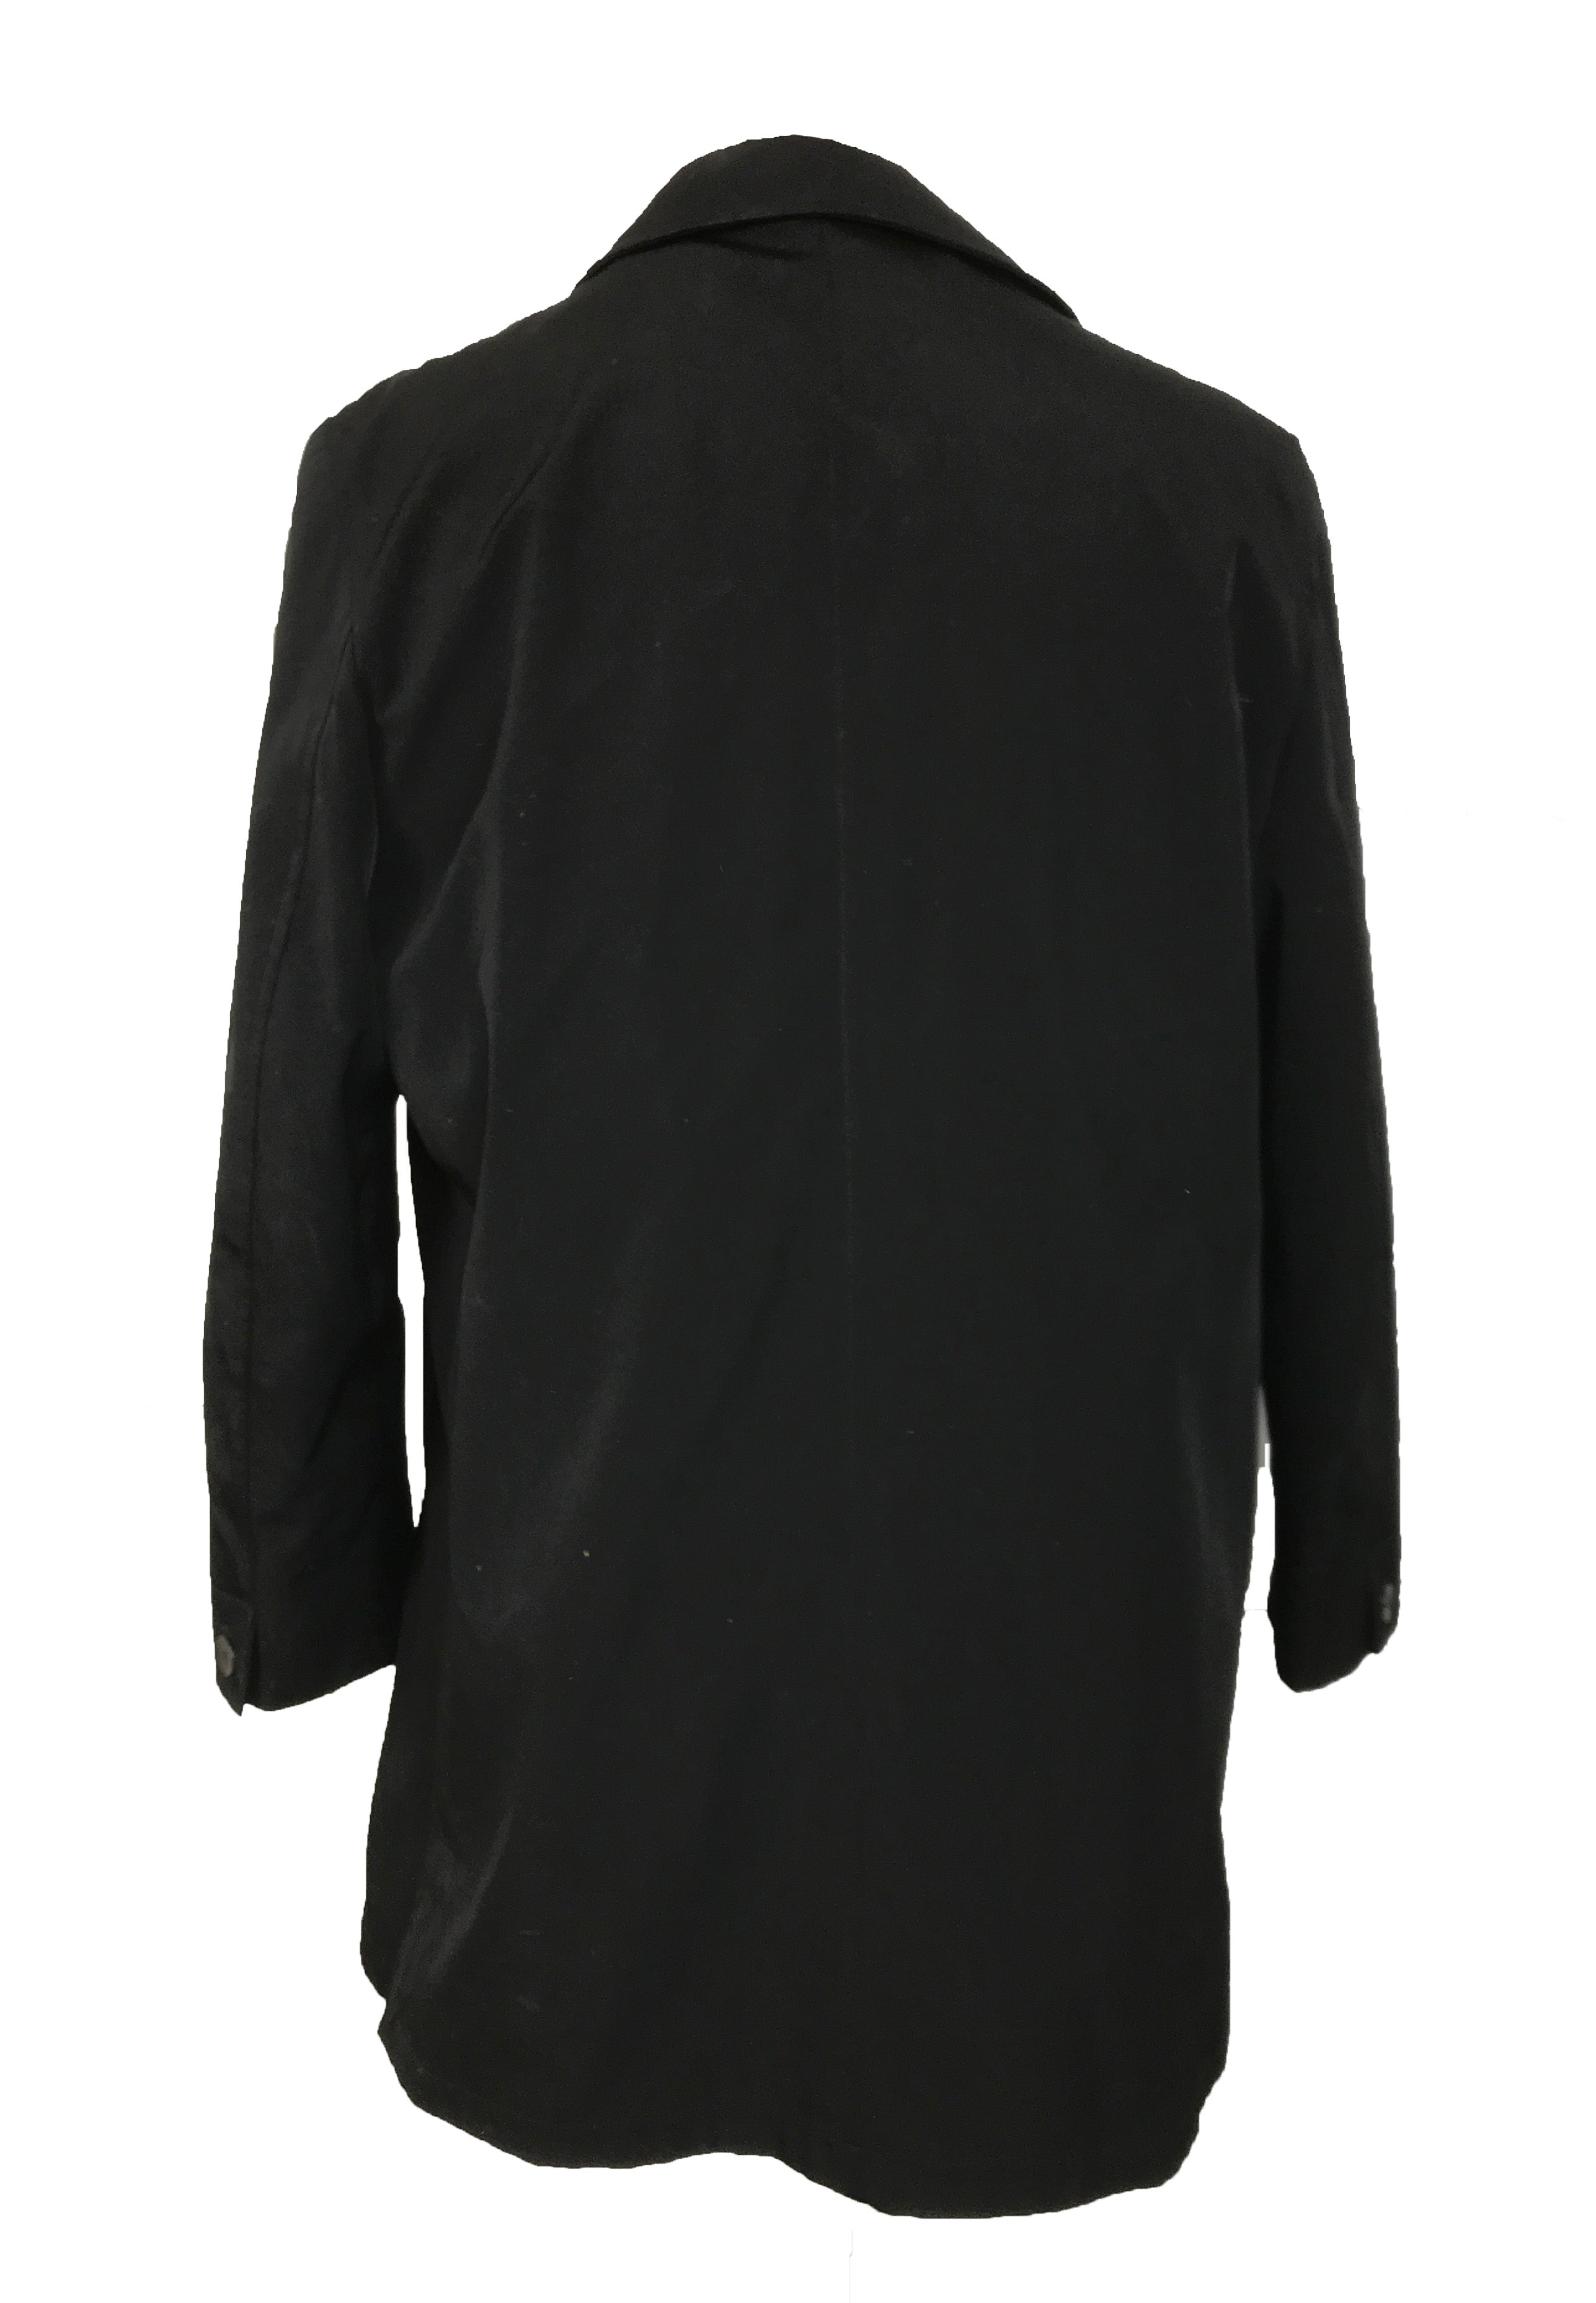 Ike Behar Black Coat Men's Size Small 36-38